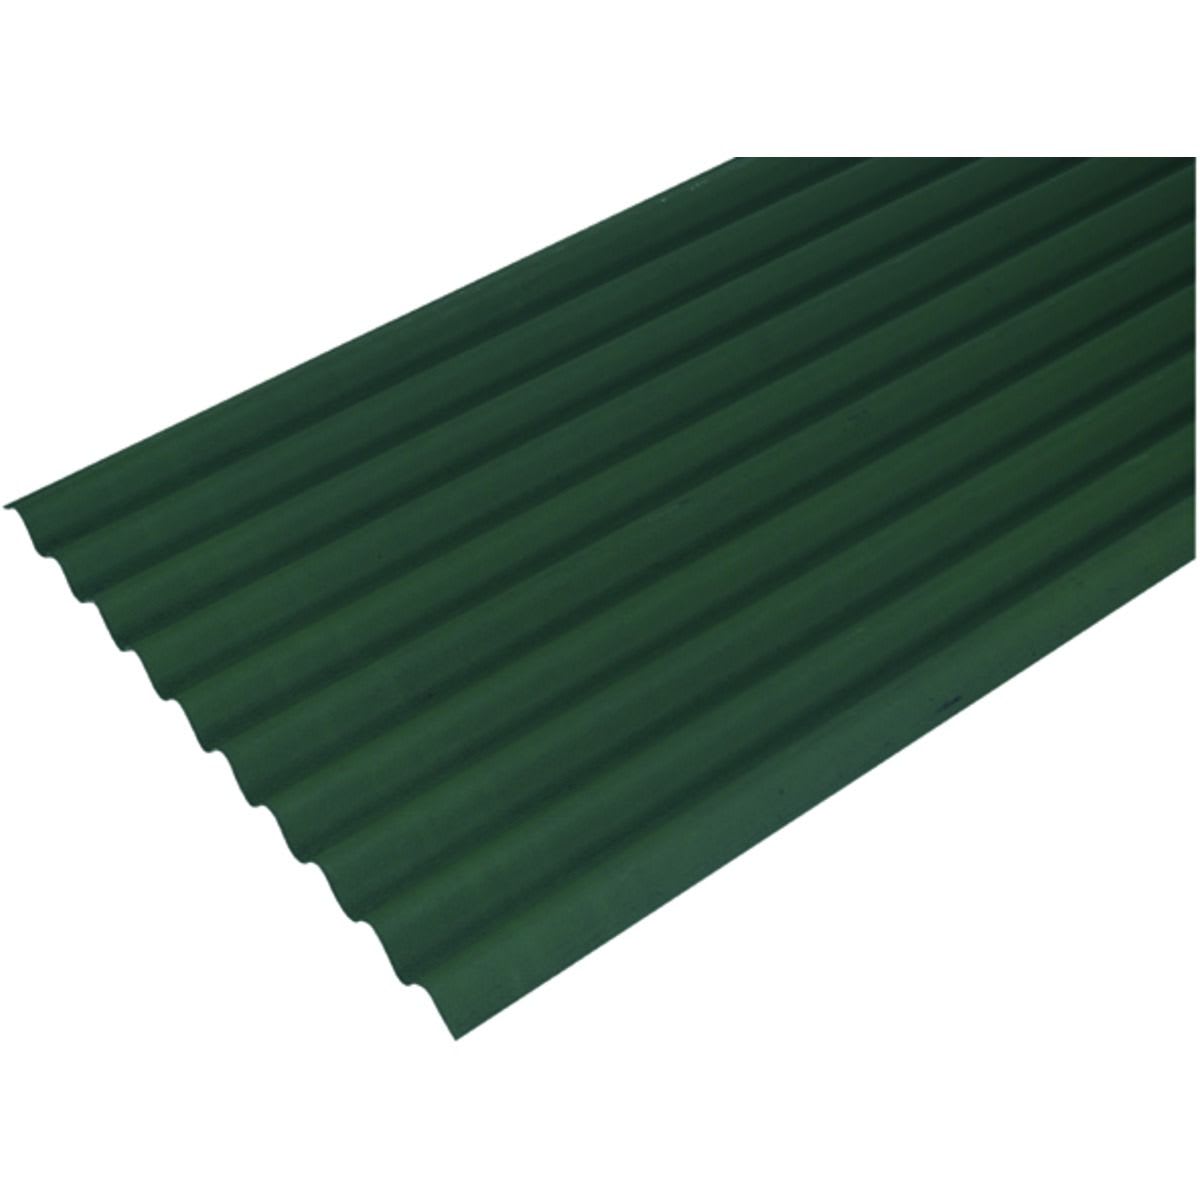 Onduline Classic Green Bitumen Corrugated Roof Sheet -